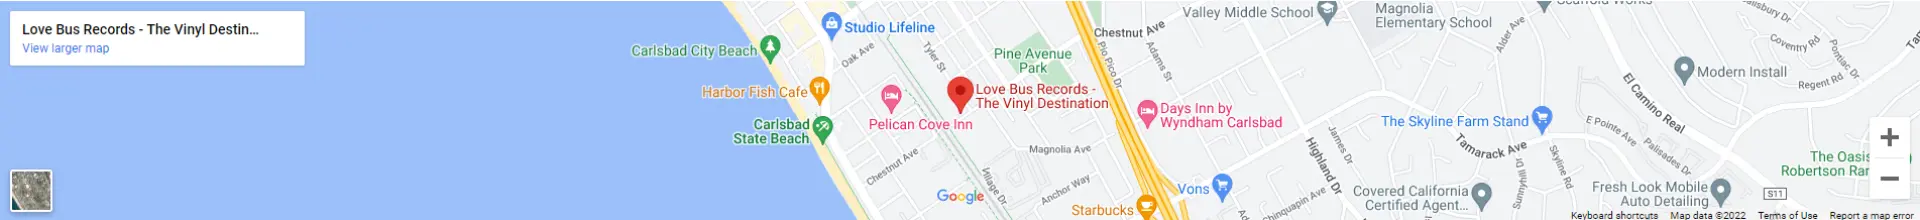 Love Bus Records